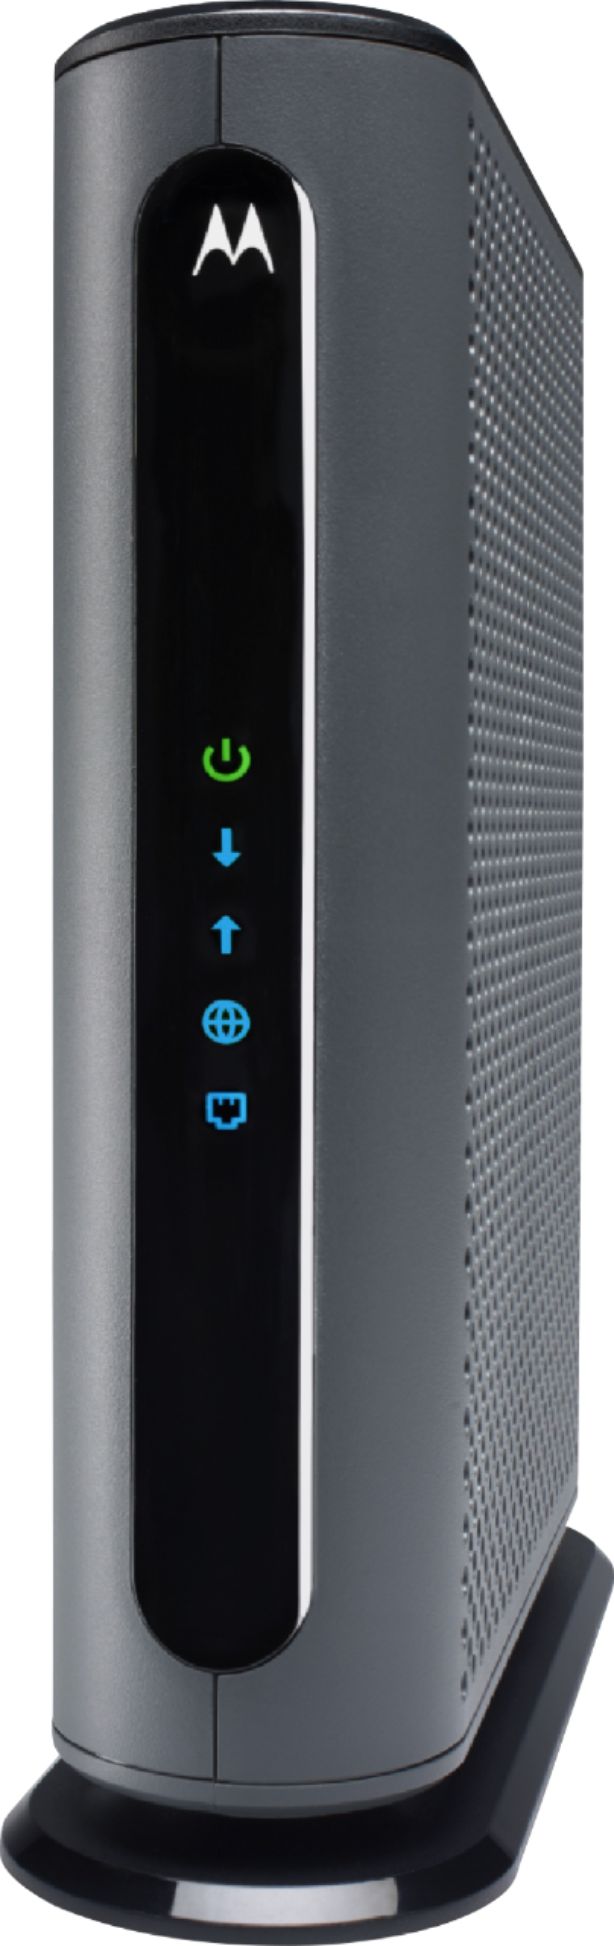 Angle View: Motorola - MB8611 32x8 DOCSIS 3.1 Cable Modem 2.5 GB Ethernet - Black